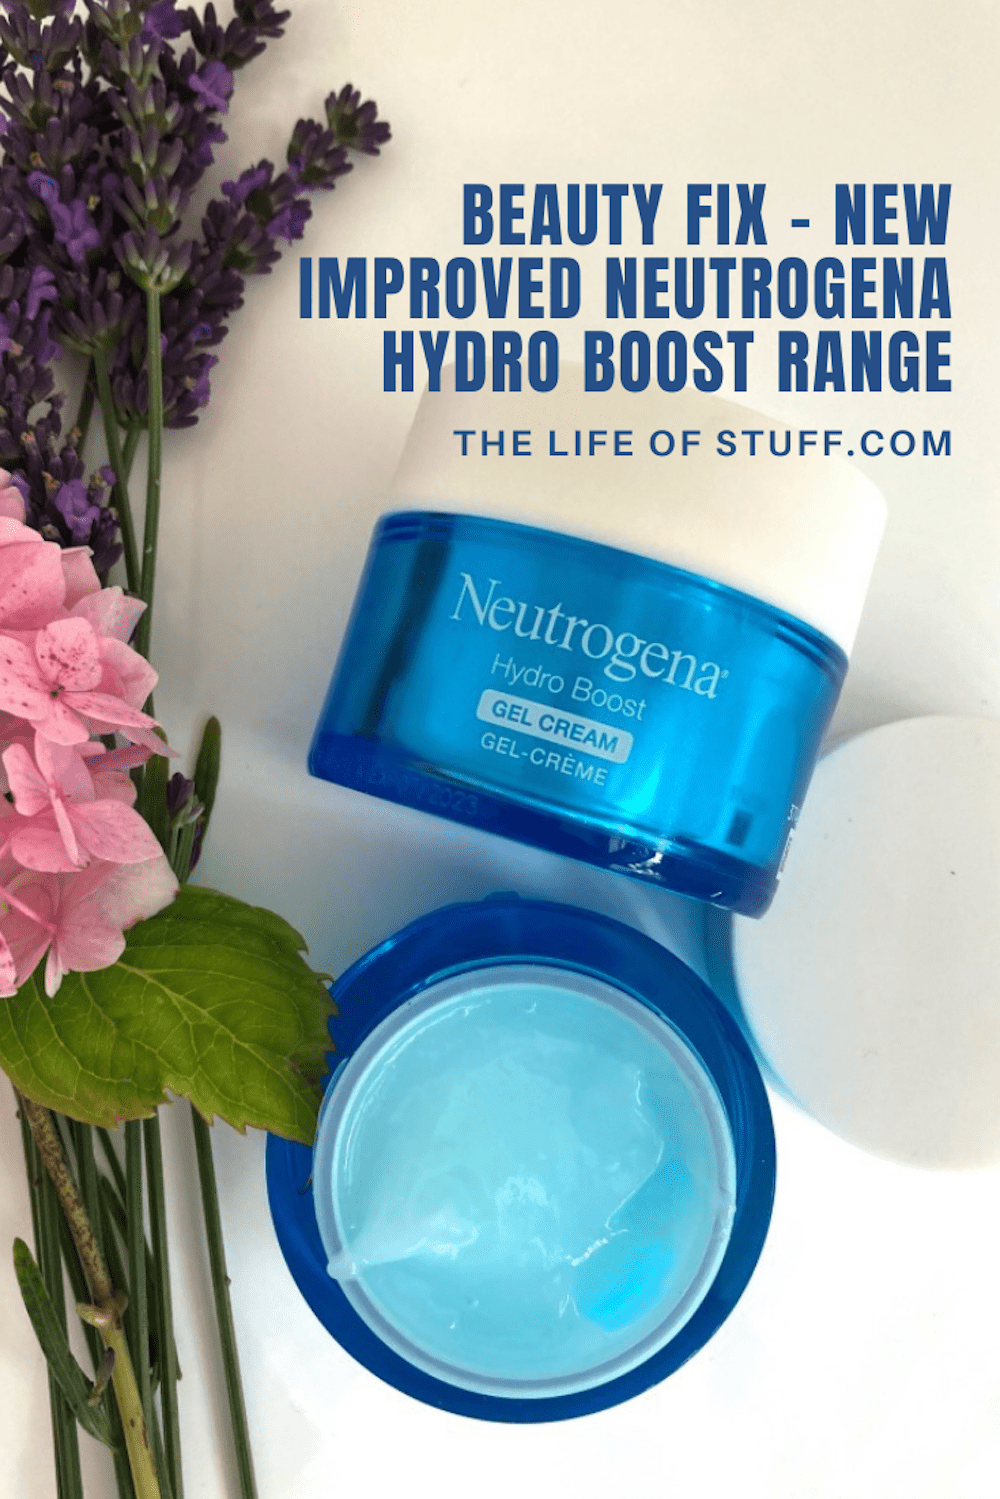 The Life of Stuff - Beauty Fix - New Improved Neutrogena Hydro Boost Range